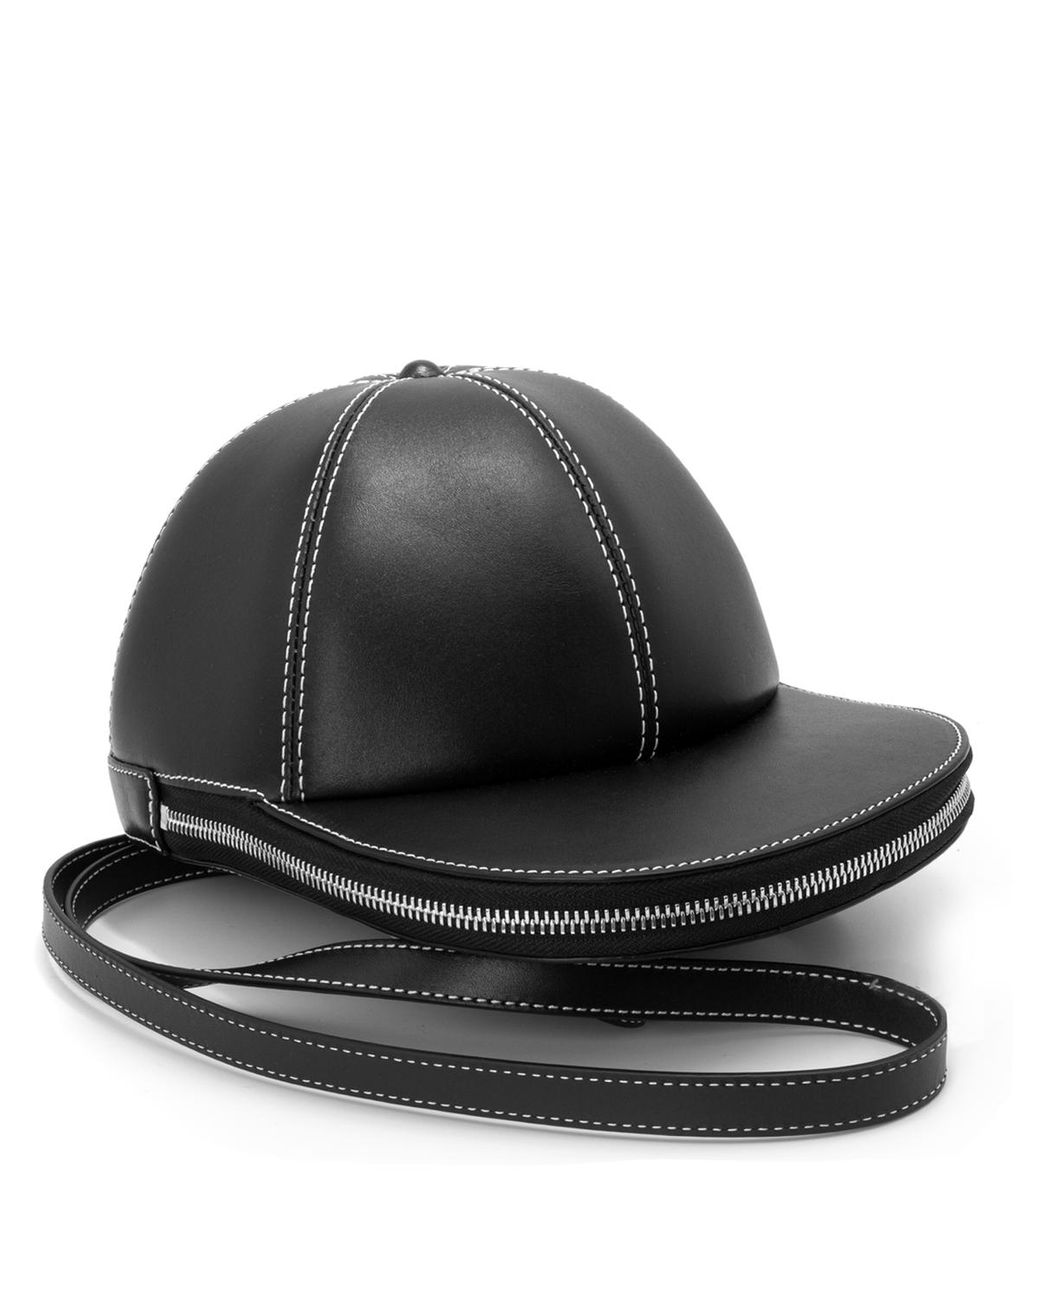 JW Anderson Leather Cap Bag in Black for Men - Lyst